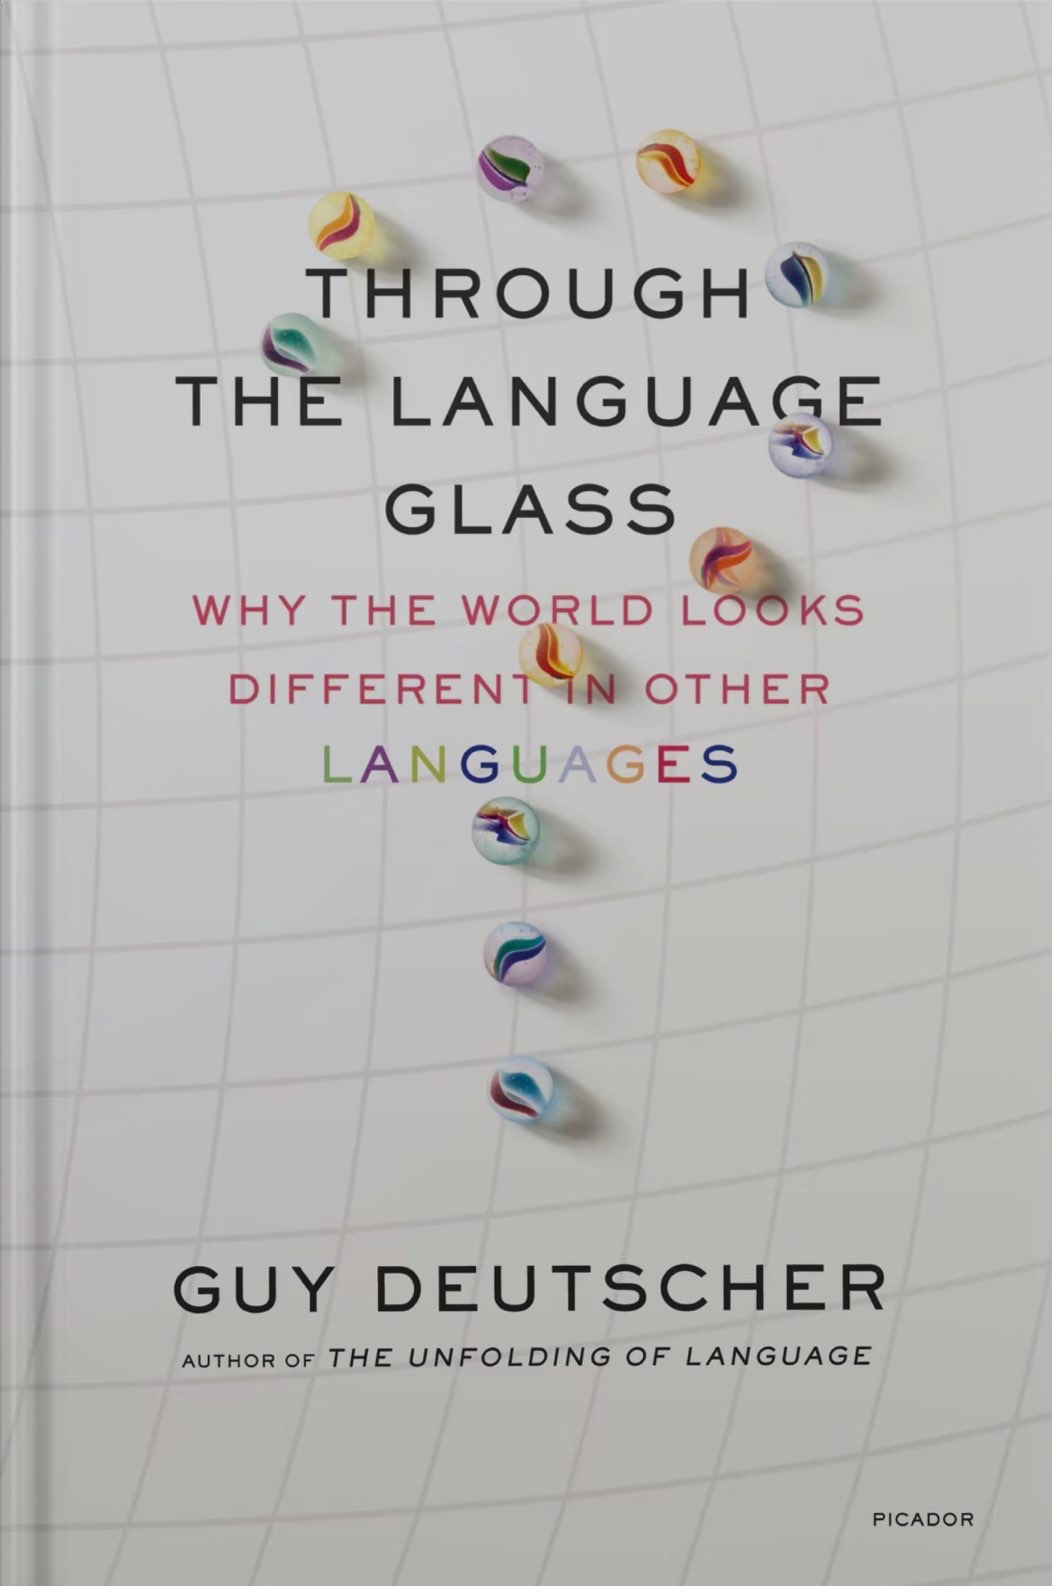 Luik Behoren Evacuatie Book Review – “Through the Language Glass” – Rajib Roy